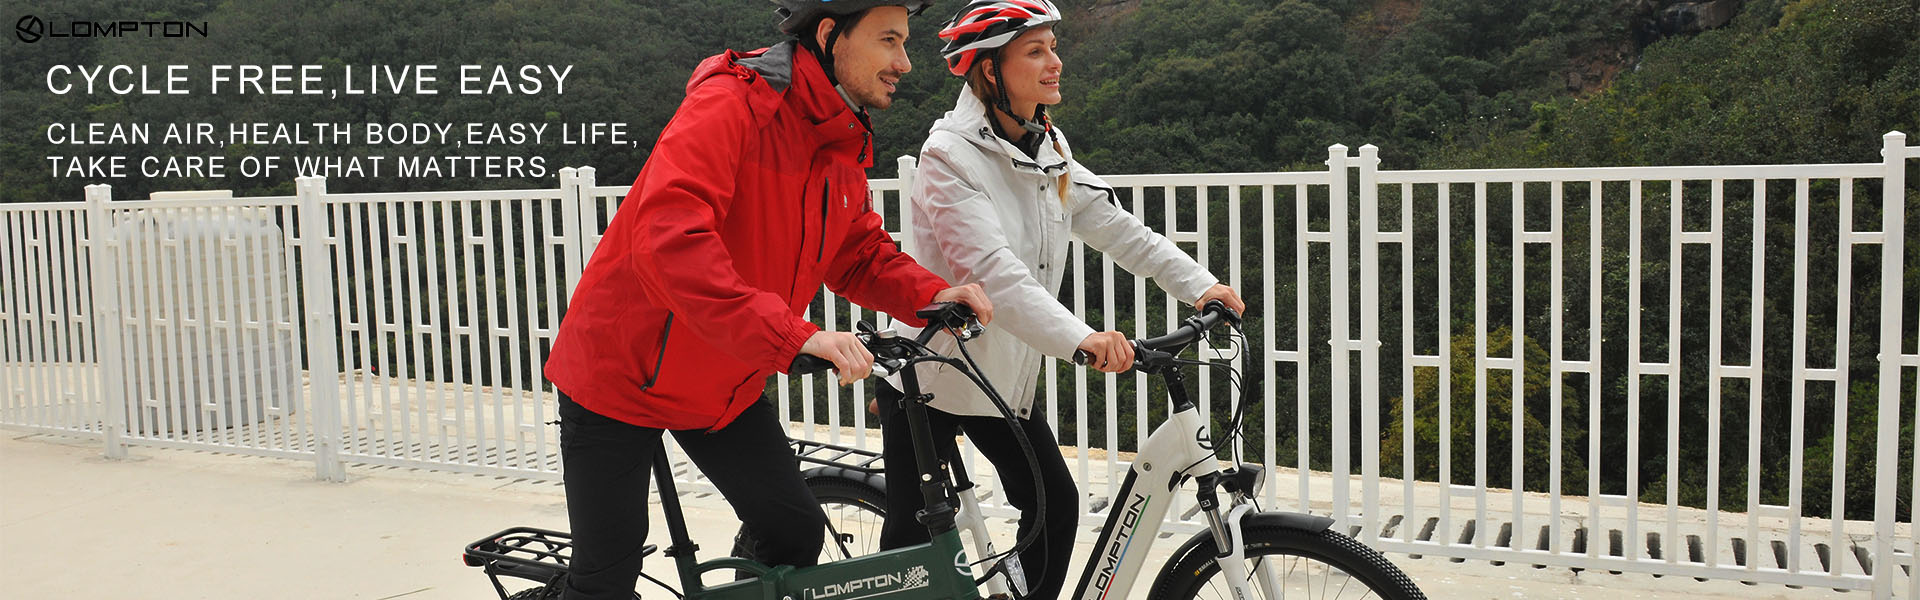 E-ποδήλατα, ηλεκτρικά ποδήλατα, μοτοποδήλατα,Shenzhen Ludon Technologies CO.,LTD